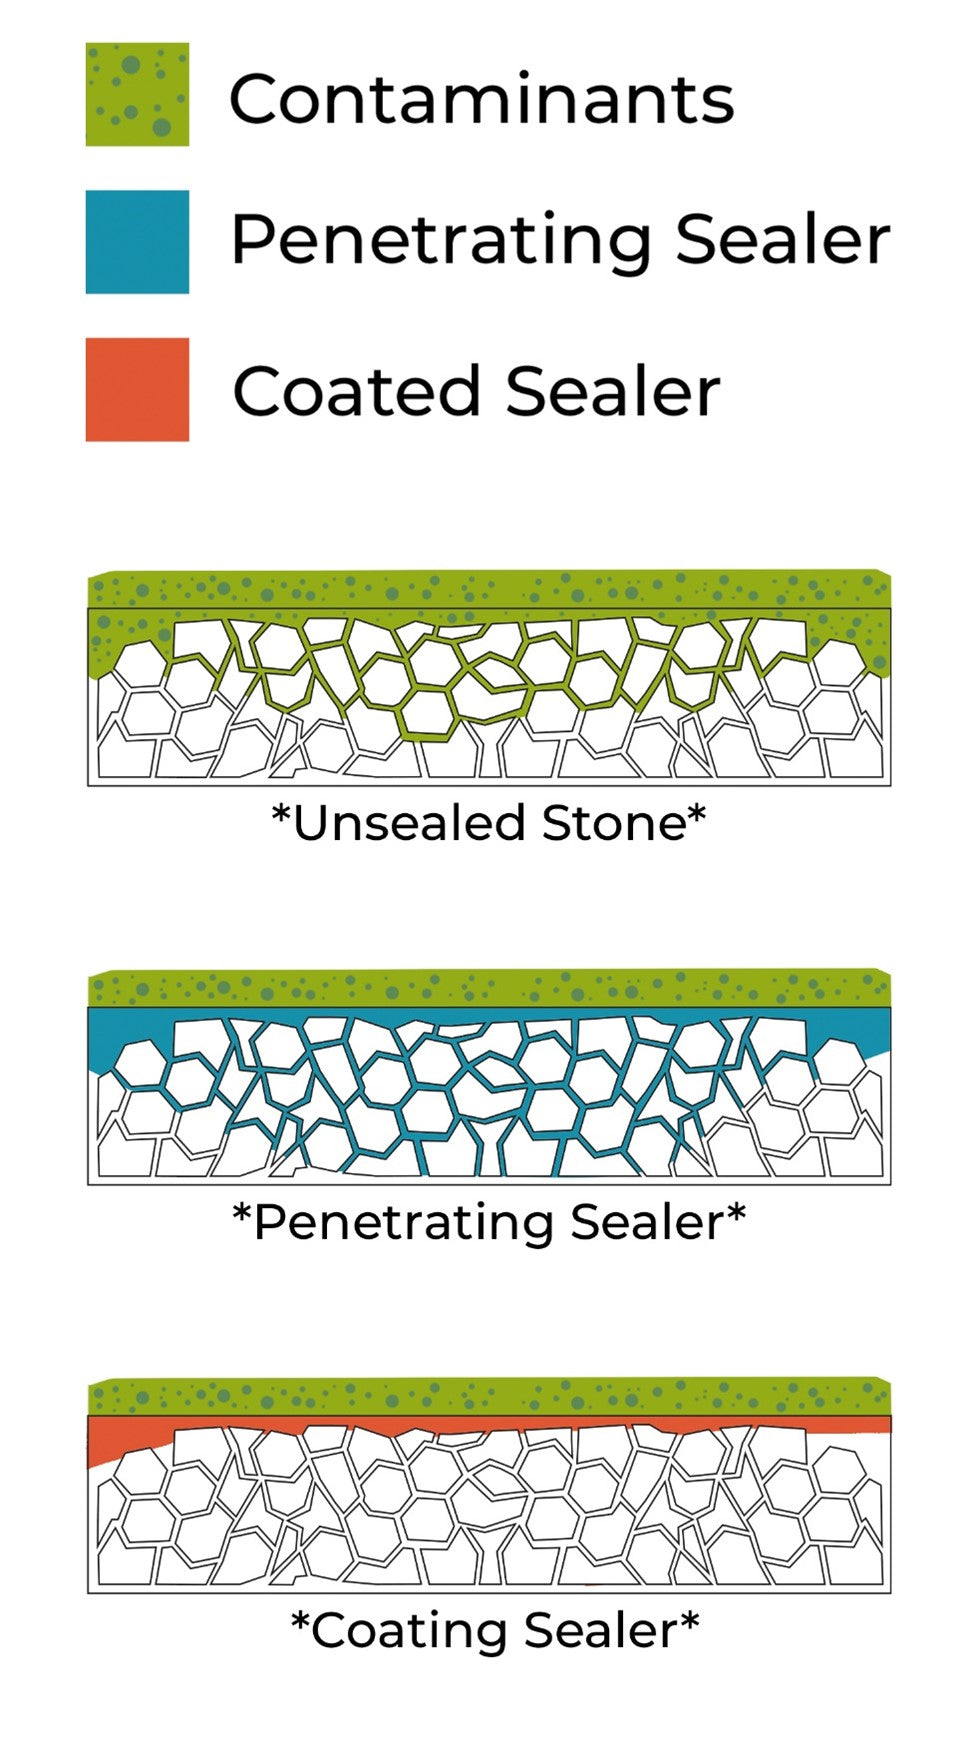 Diagram showing Penetrating versus Coating Sealers